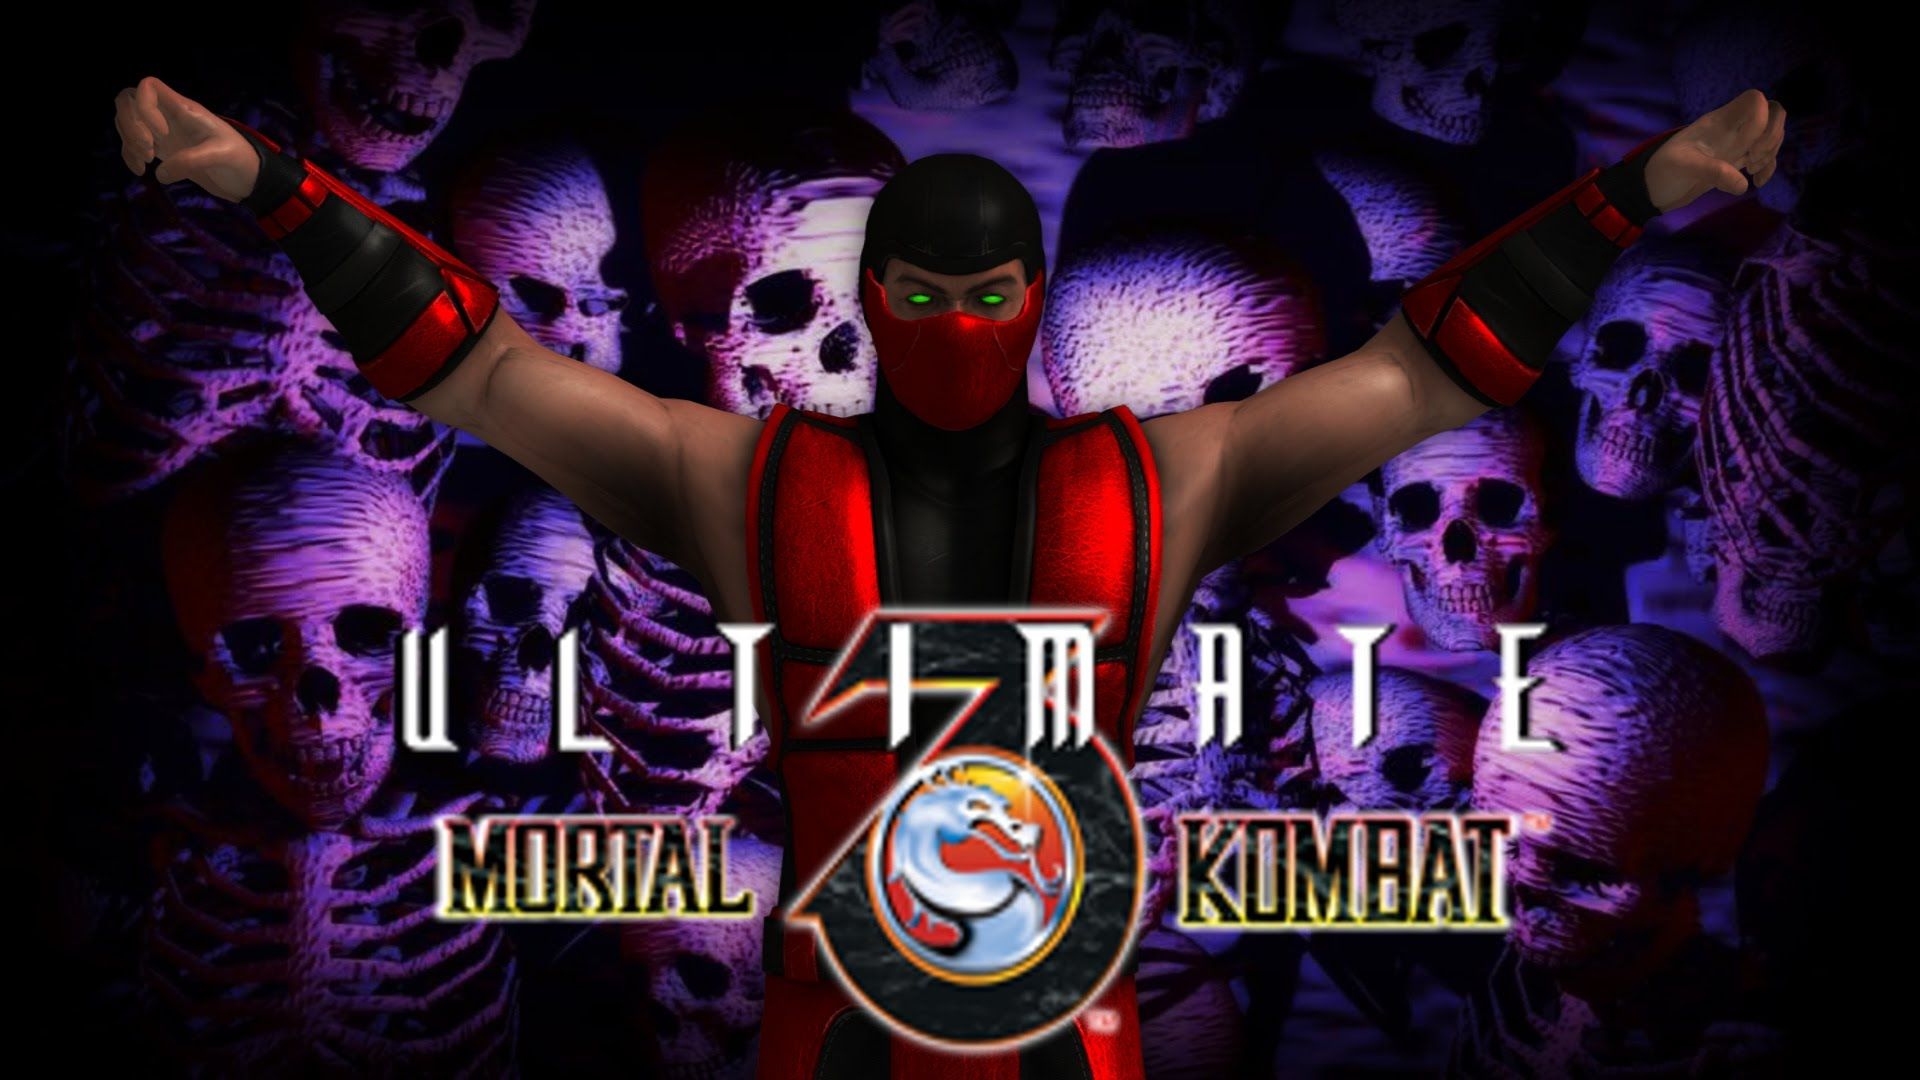 Мортал комбат 3 ultimate. Ultimate Mortal Kombat 3. MK 3 Ultimate Sega. Mortal Kombat 3 Ultimate Sega. Mortal Kombat 3 Ultimate Sega Original.